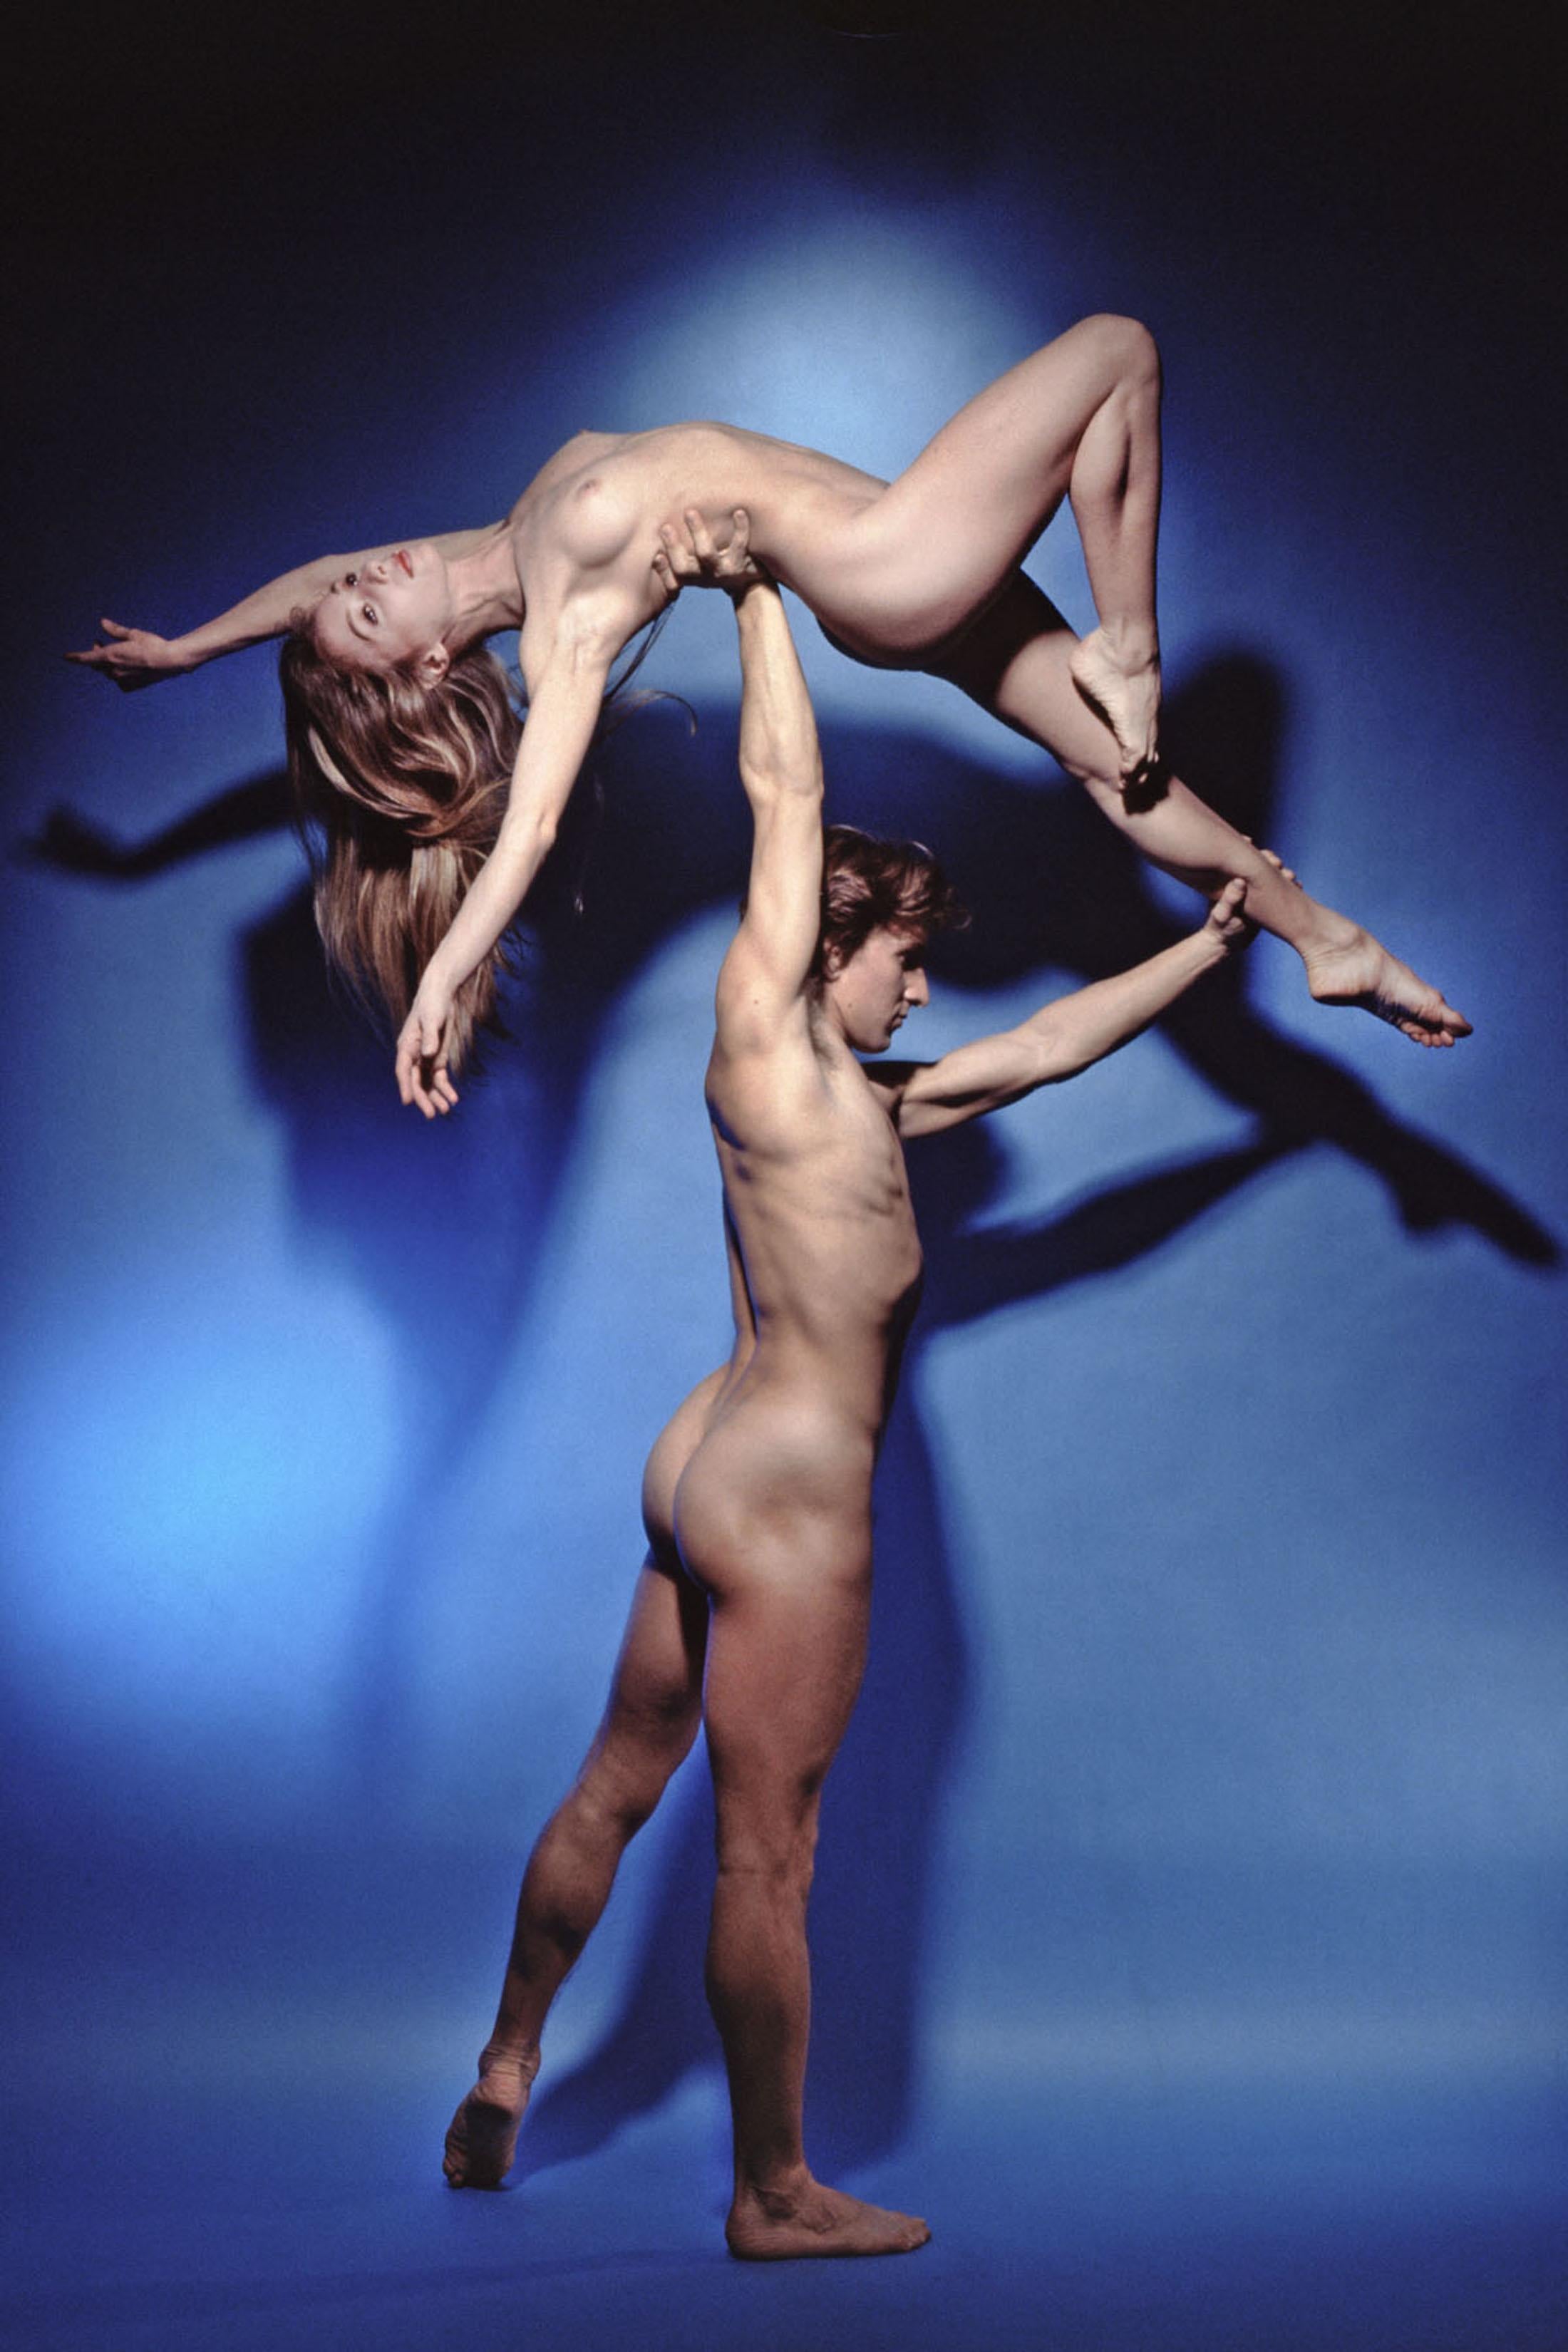 Jack Mitchell Nude Photograph - Famed dancers Julio Bocca & Eleonora Cassano nude for 'Playboy' magazine